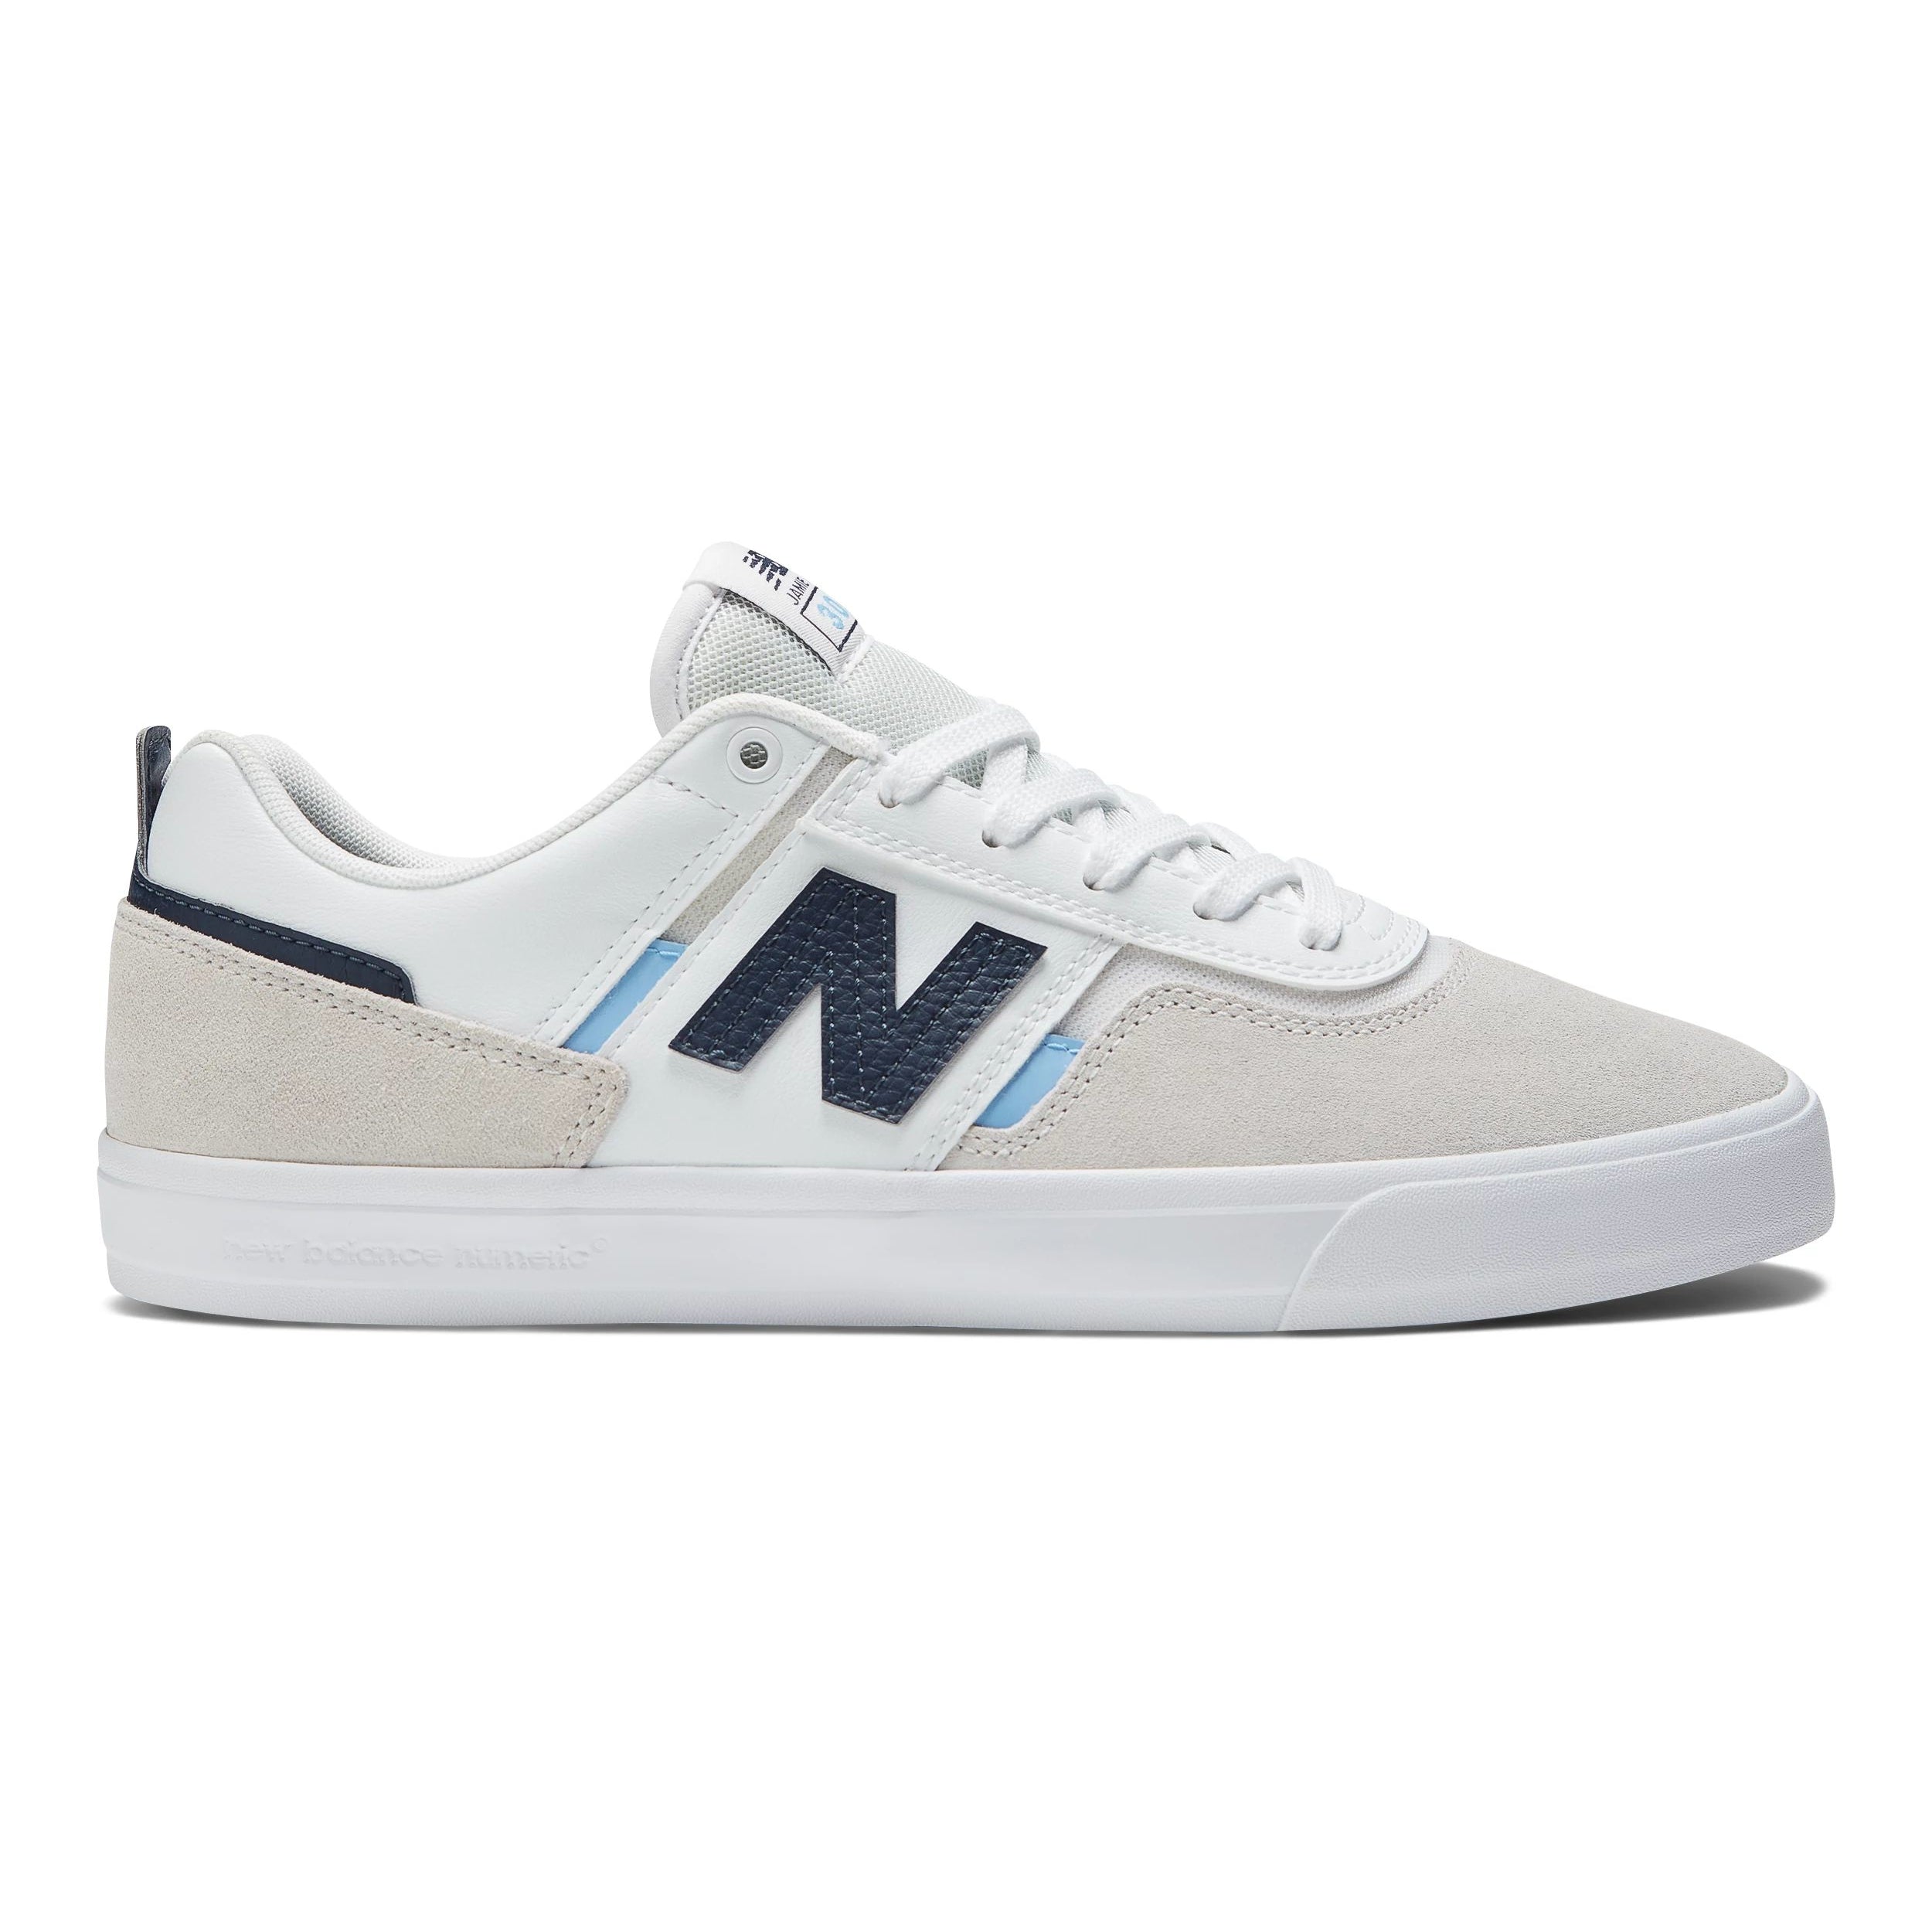 White/Navy NM306 Jamie Foy NB Numeric Skate Shoe